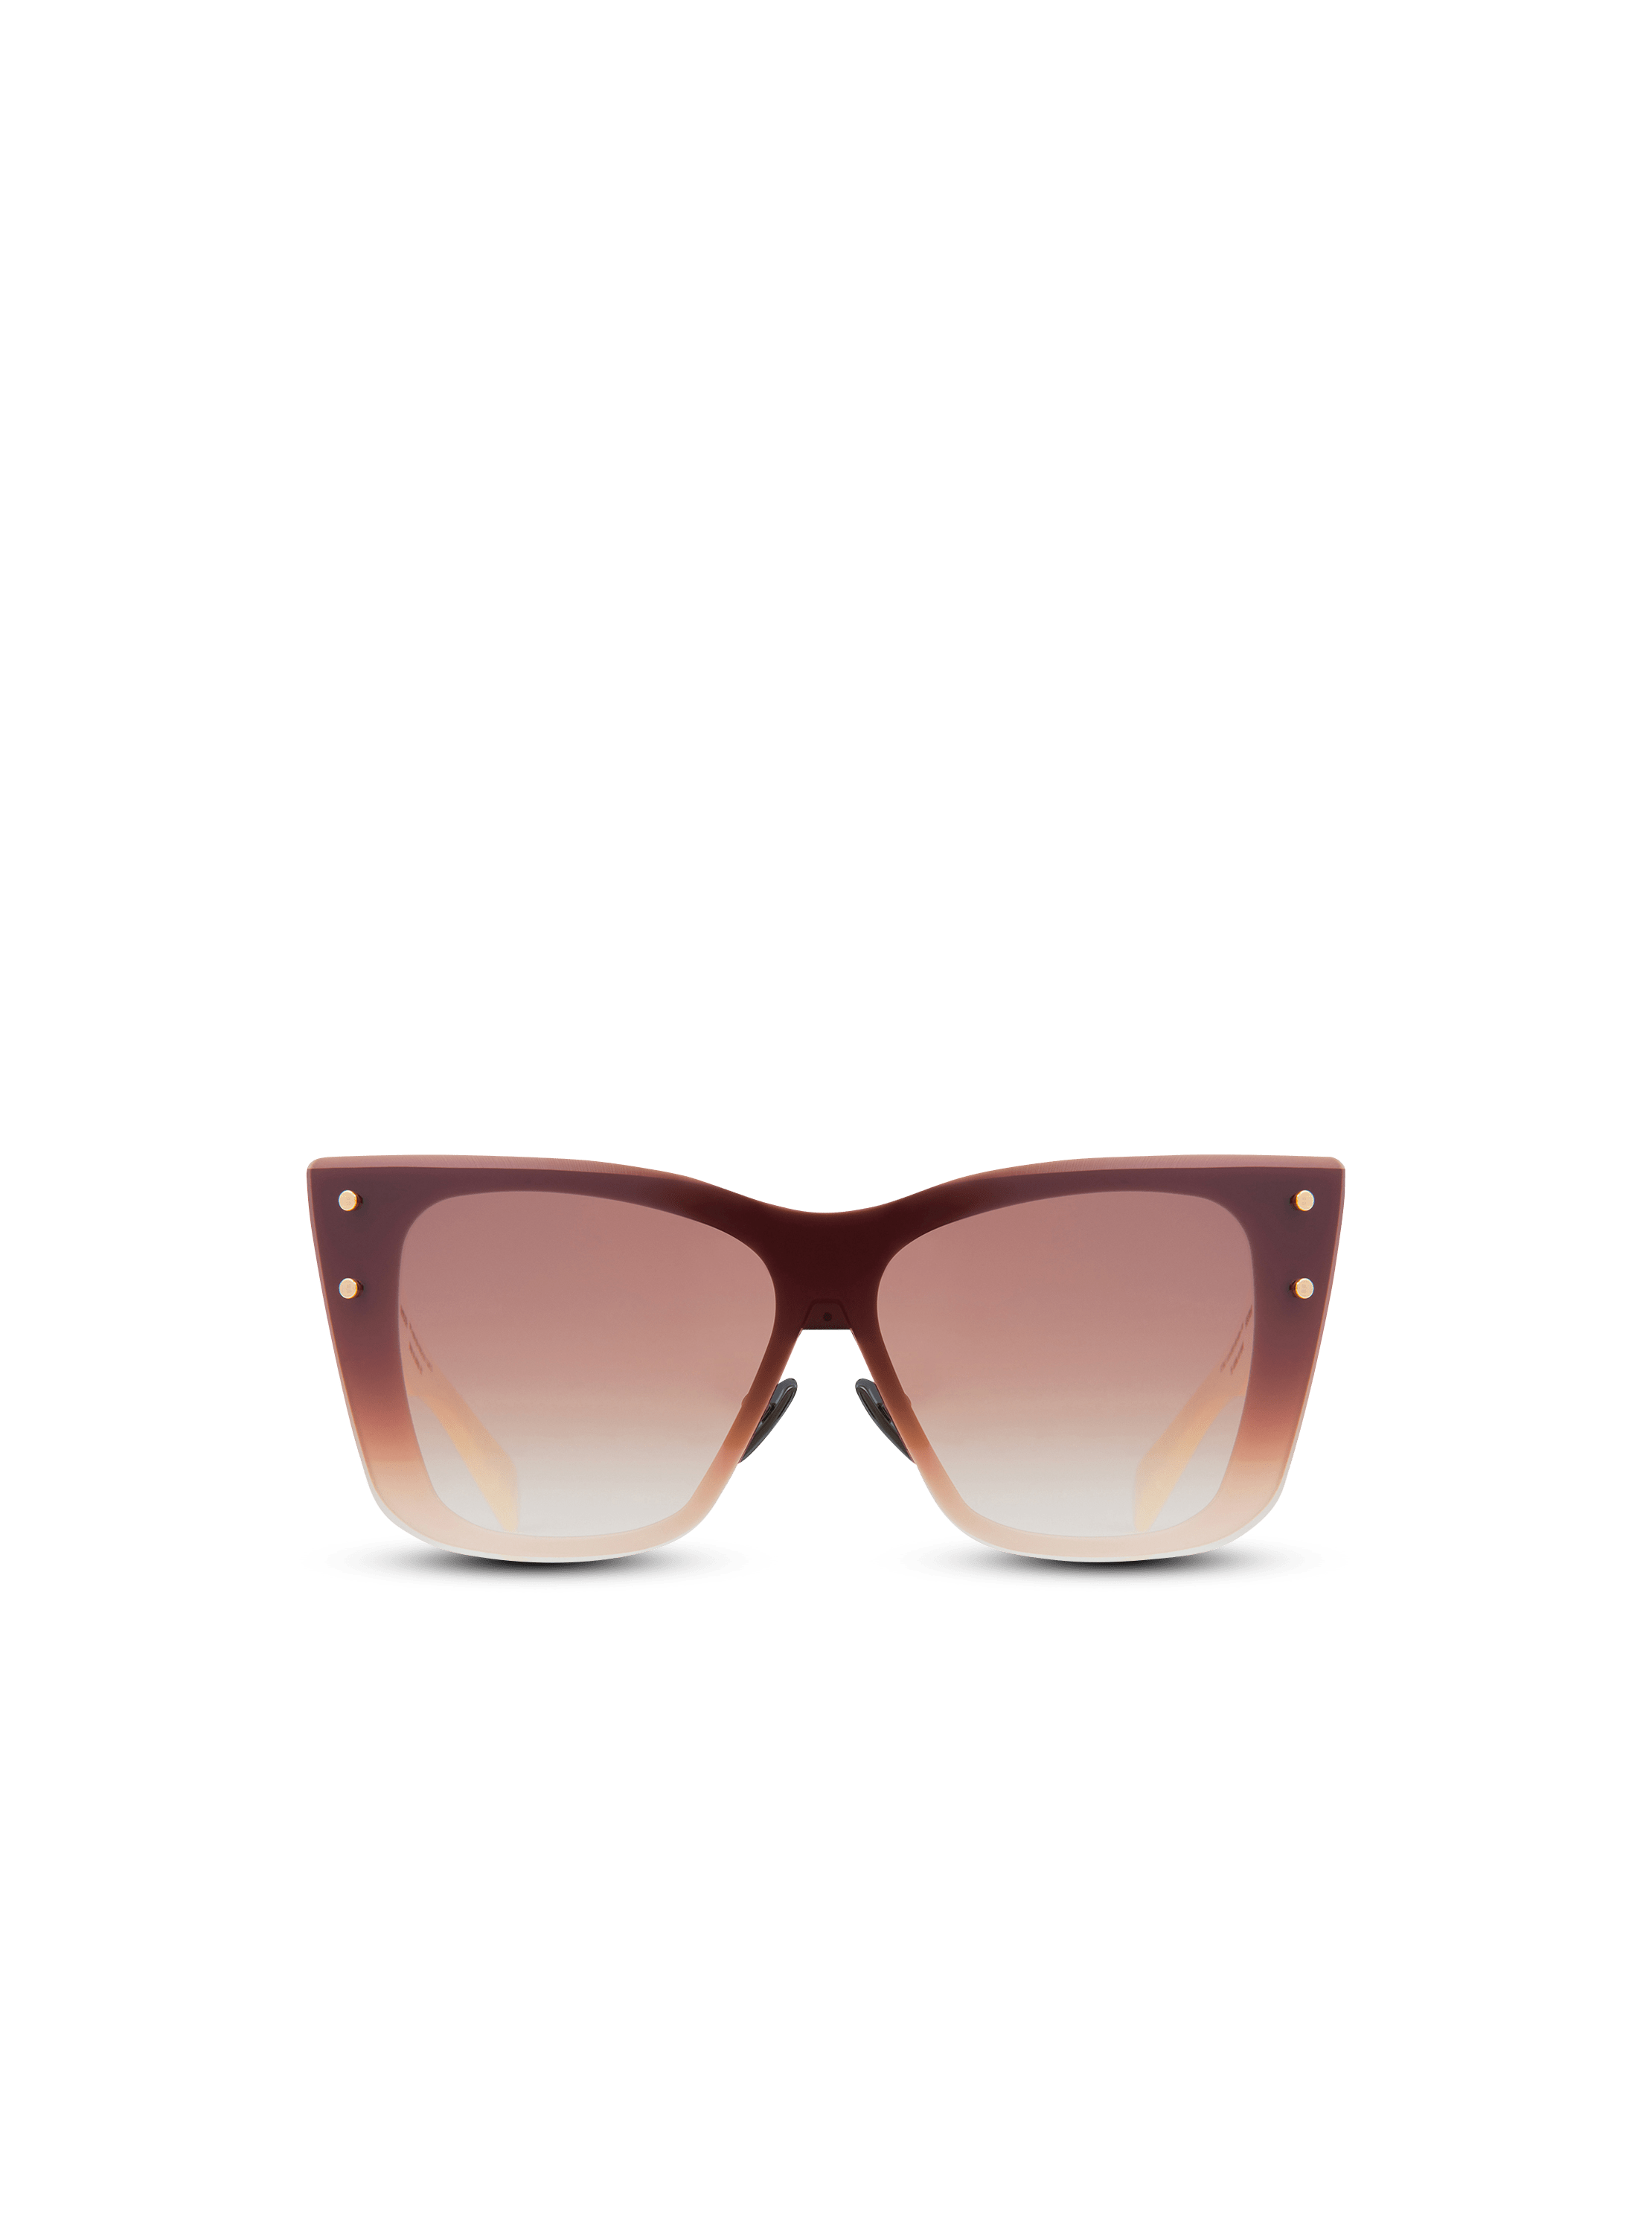 Tortoiseshell-effect titanium Armour sunglasses